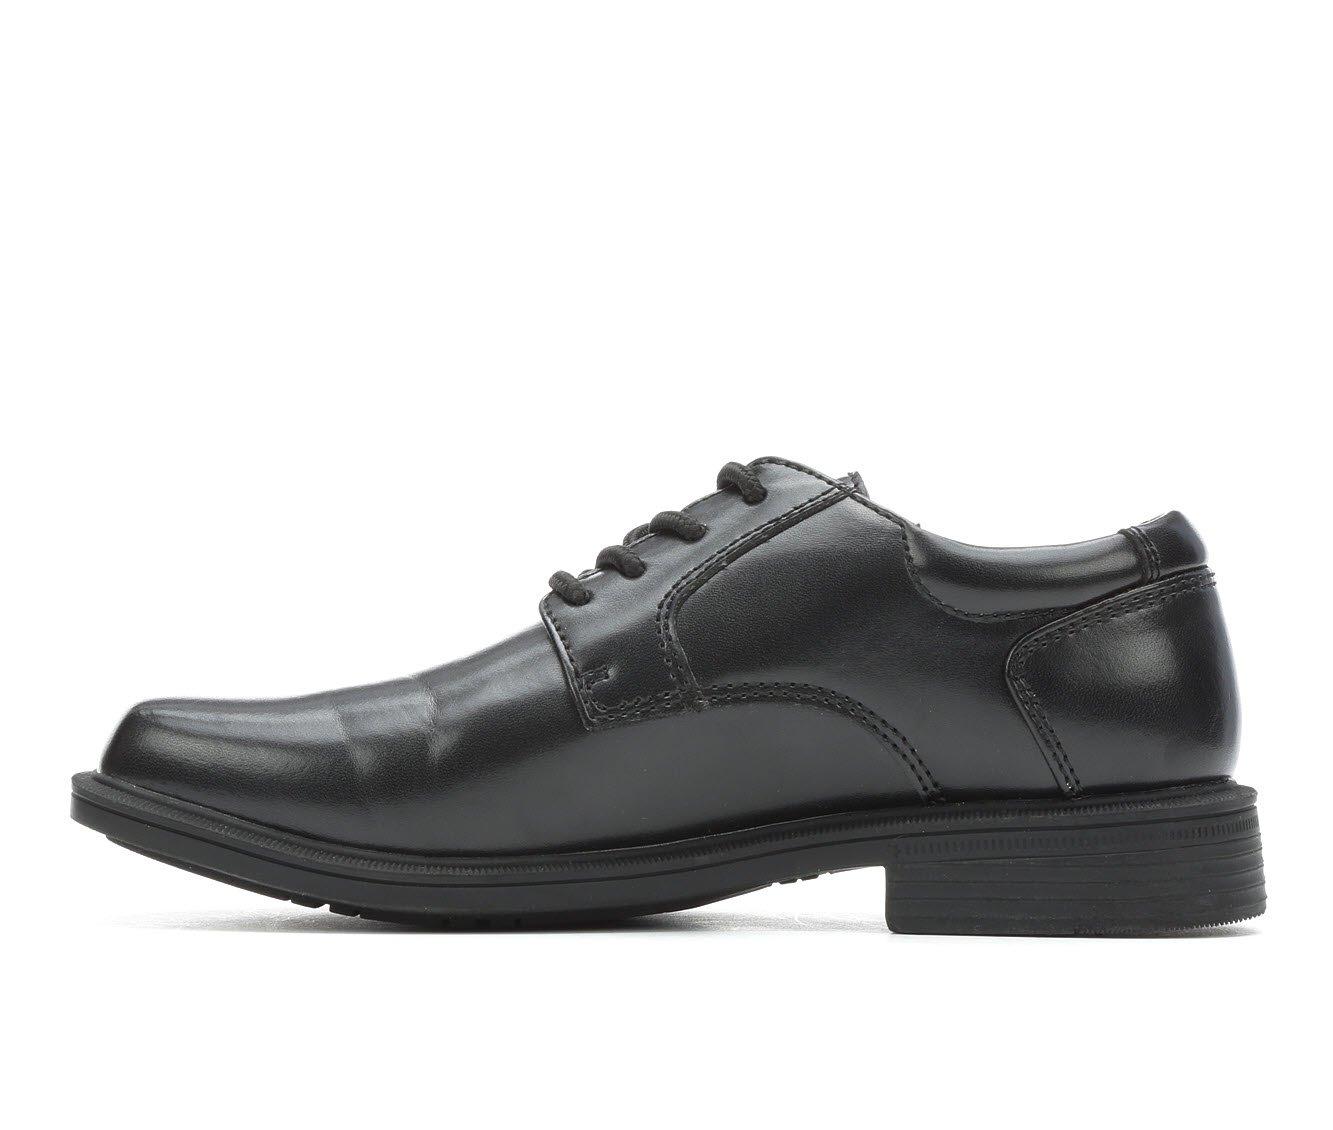 boys black dress shoes